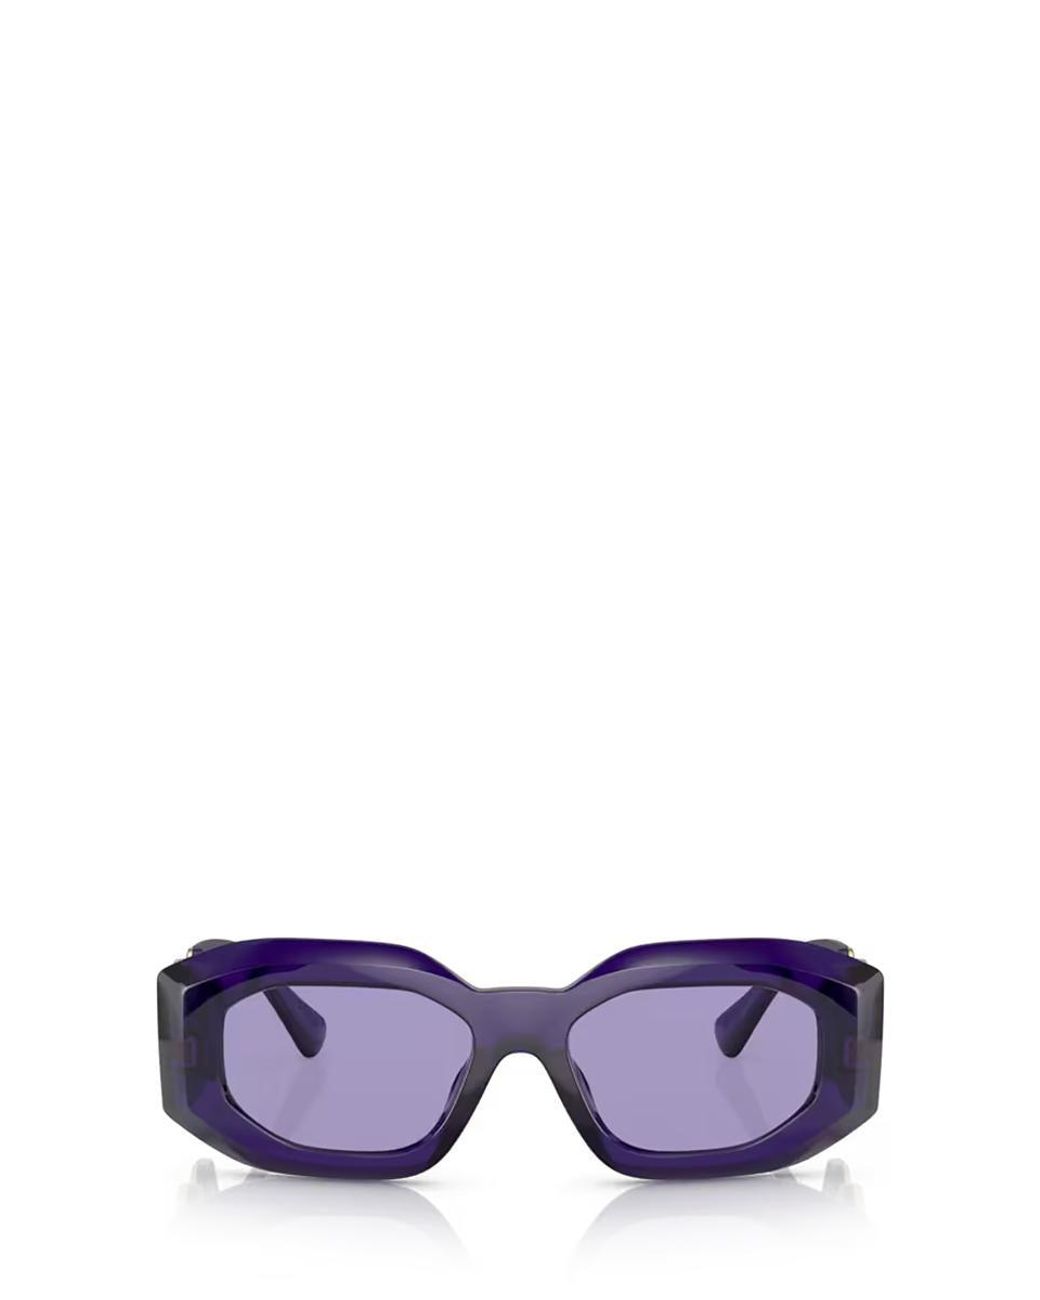 Versace - Sunglasses Visor Tribute - Violet - Sunglasses - Versace Eyewear  - Avvenice